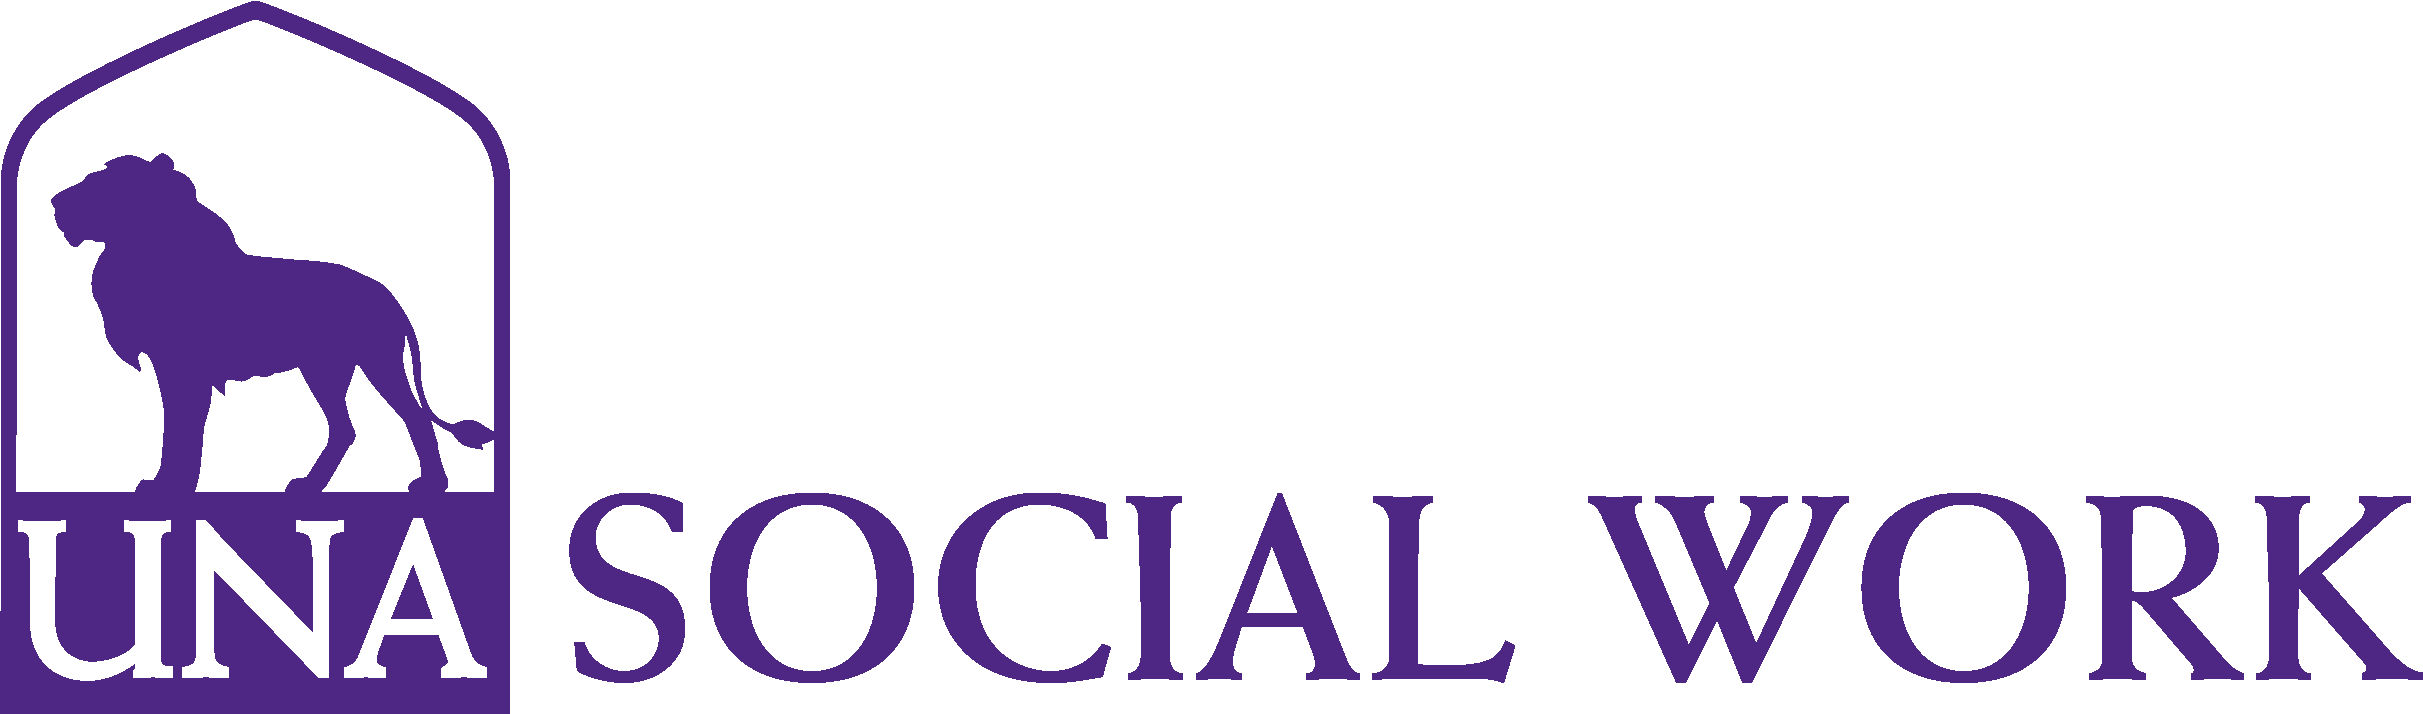 socialwork logo 3